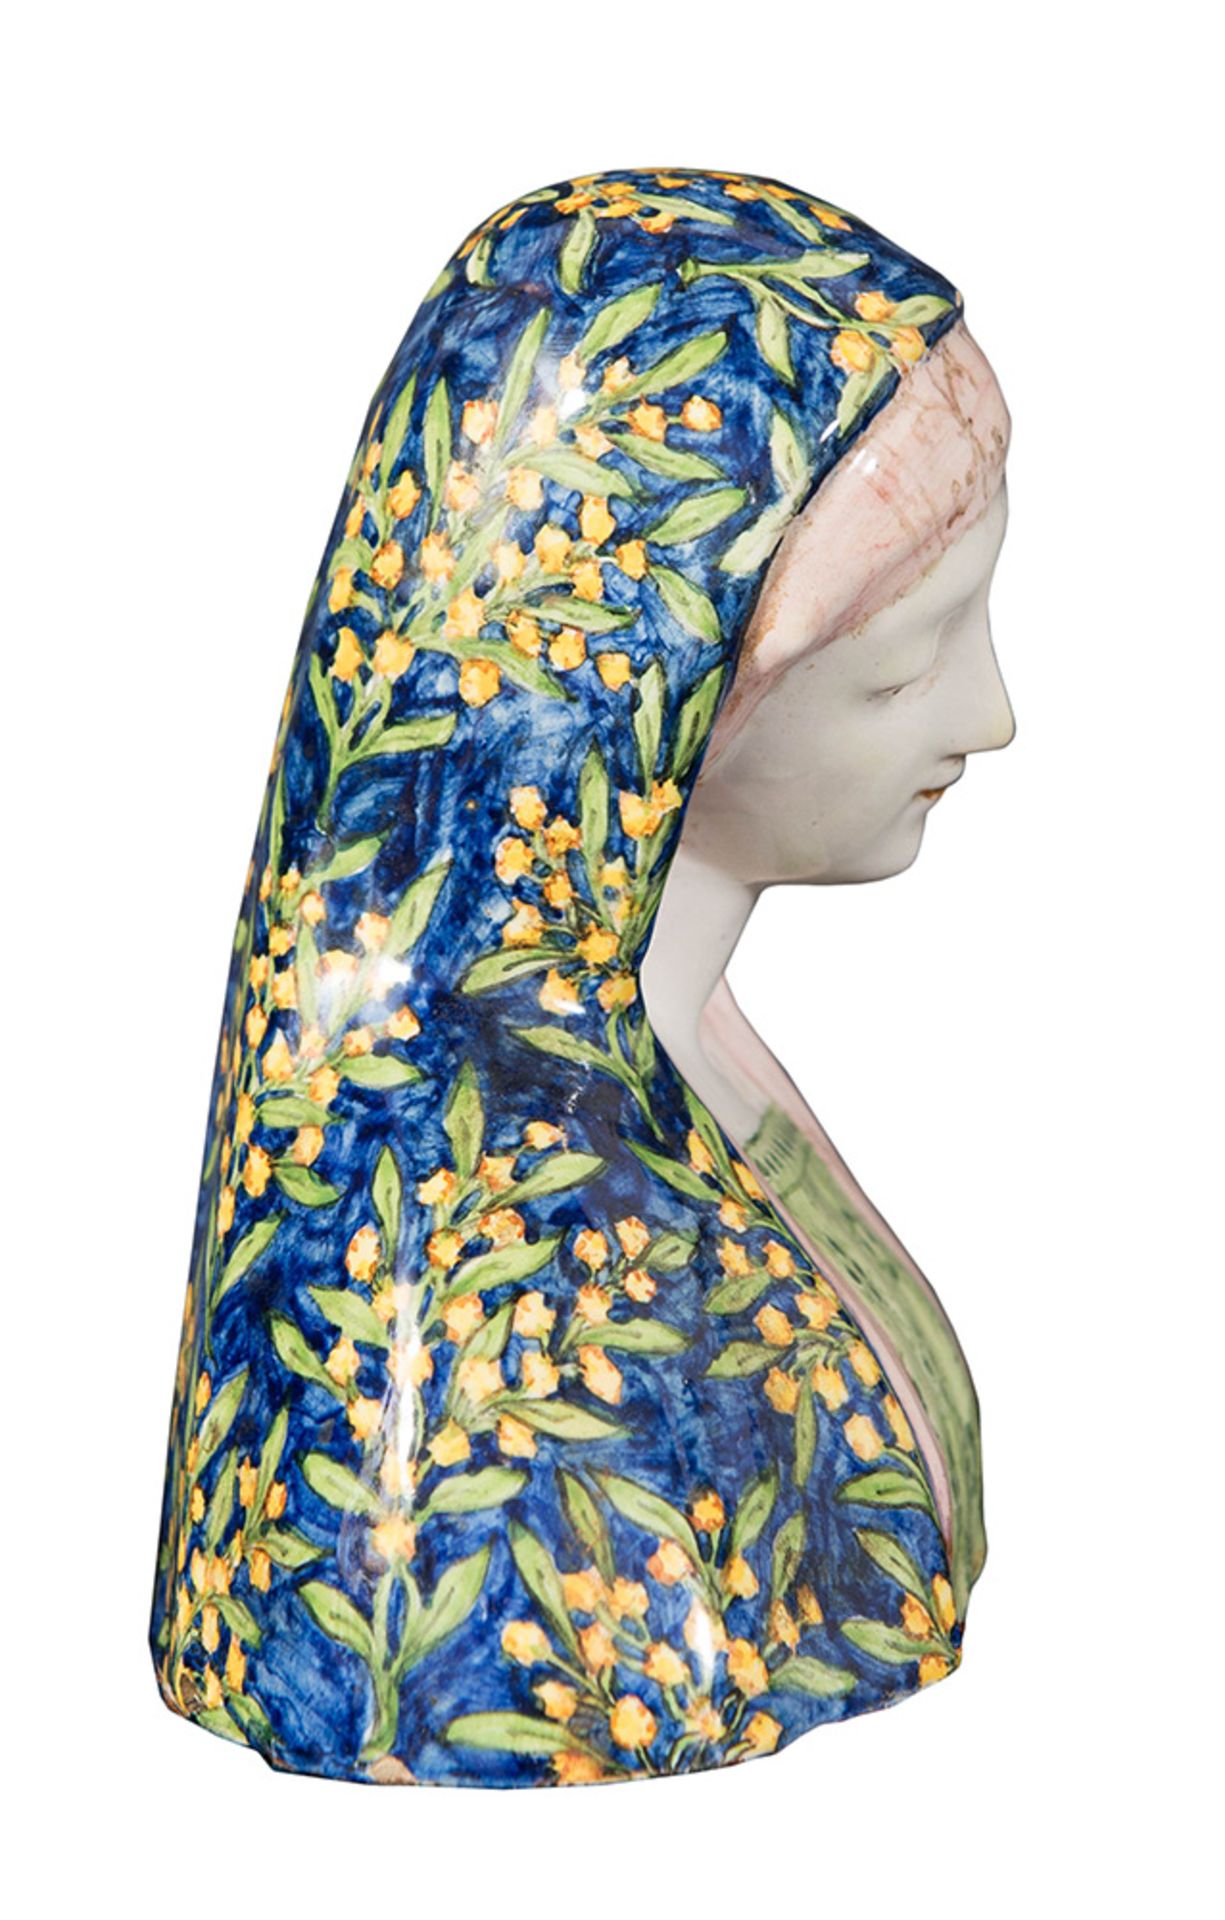 Minghetti polychromed ceramic bust, "Madonna", mark: '*Bologna (Italia)’, Minghetti Manufacture - Bild 2 aus 2